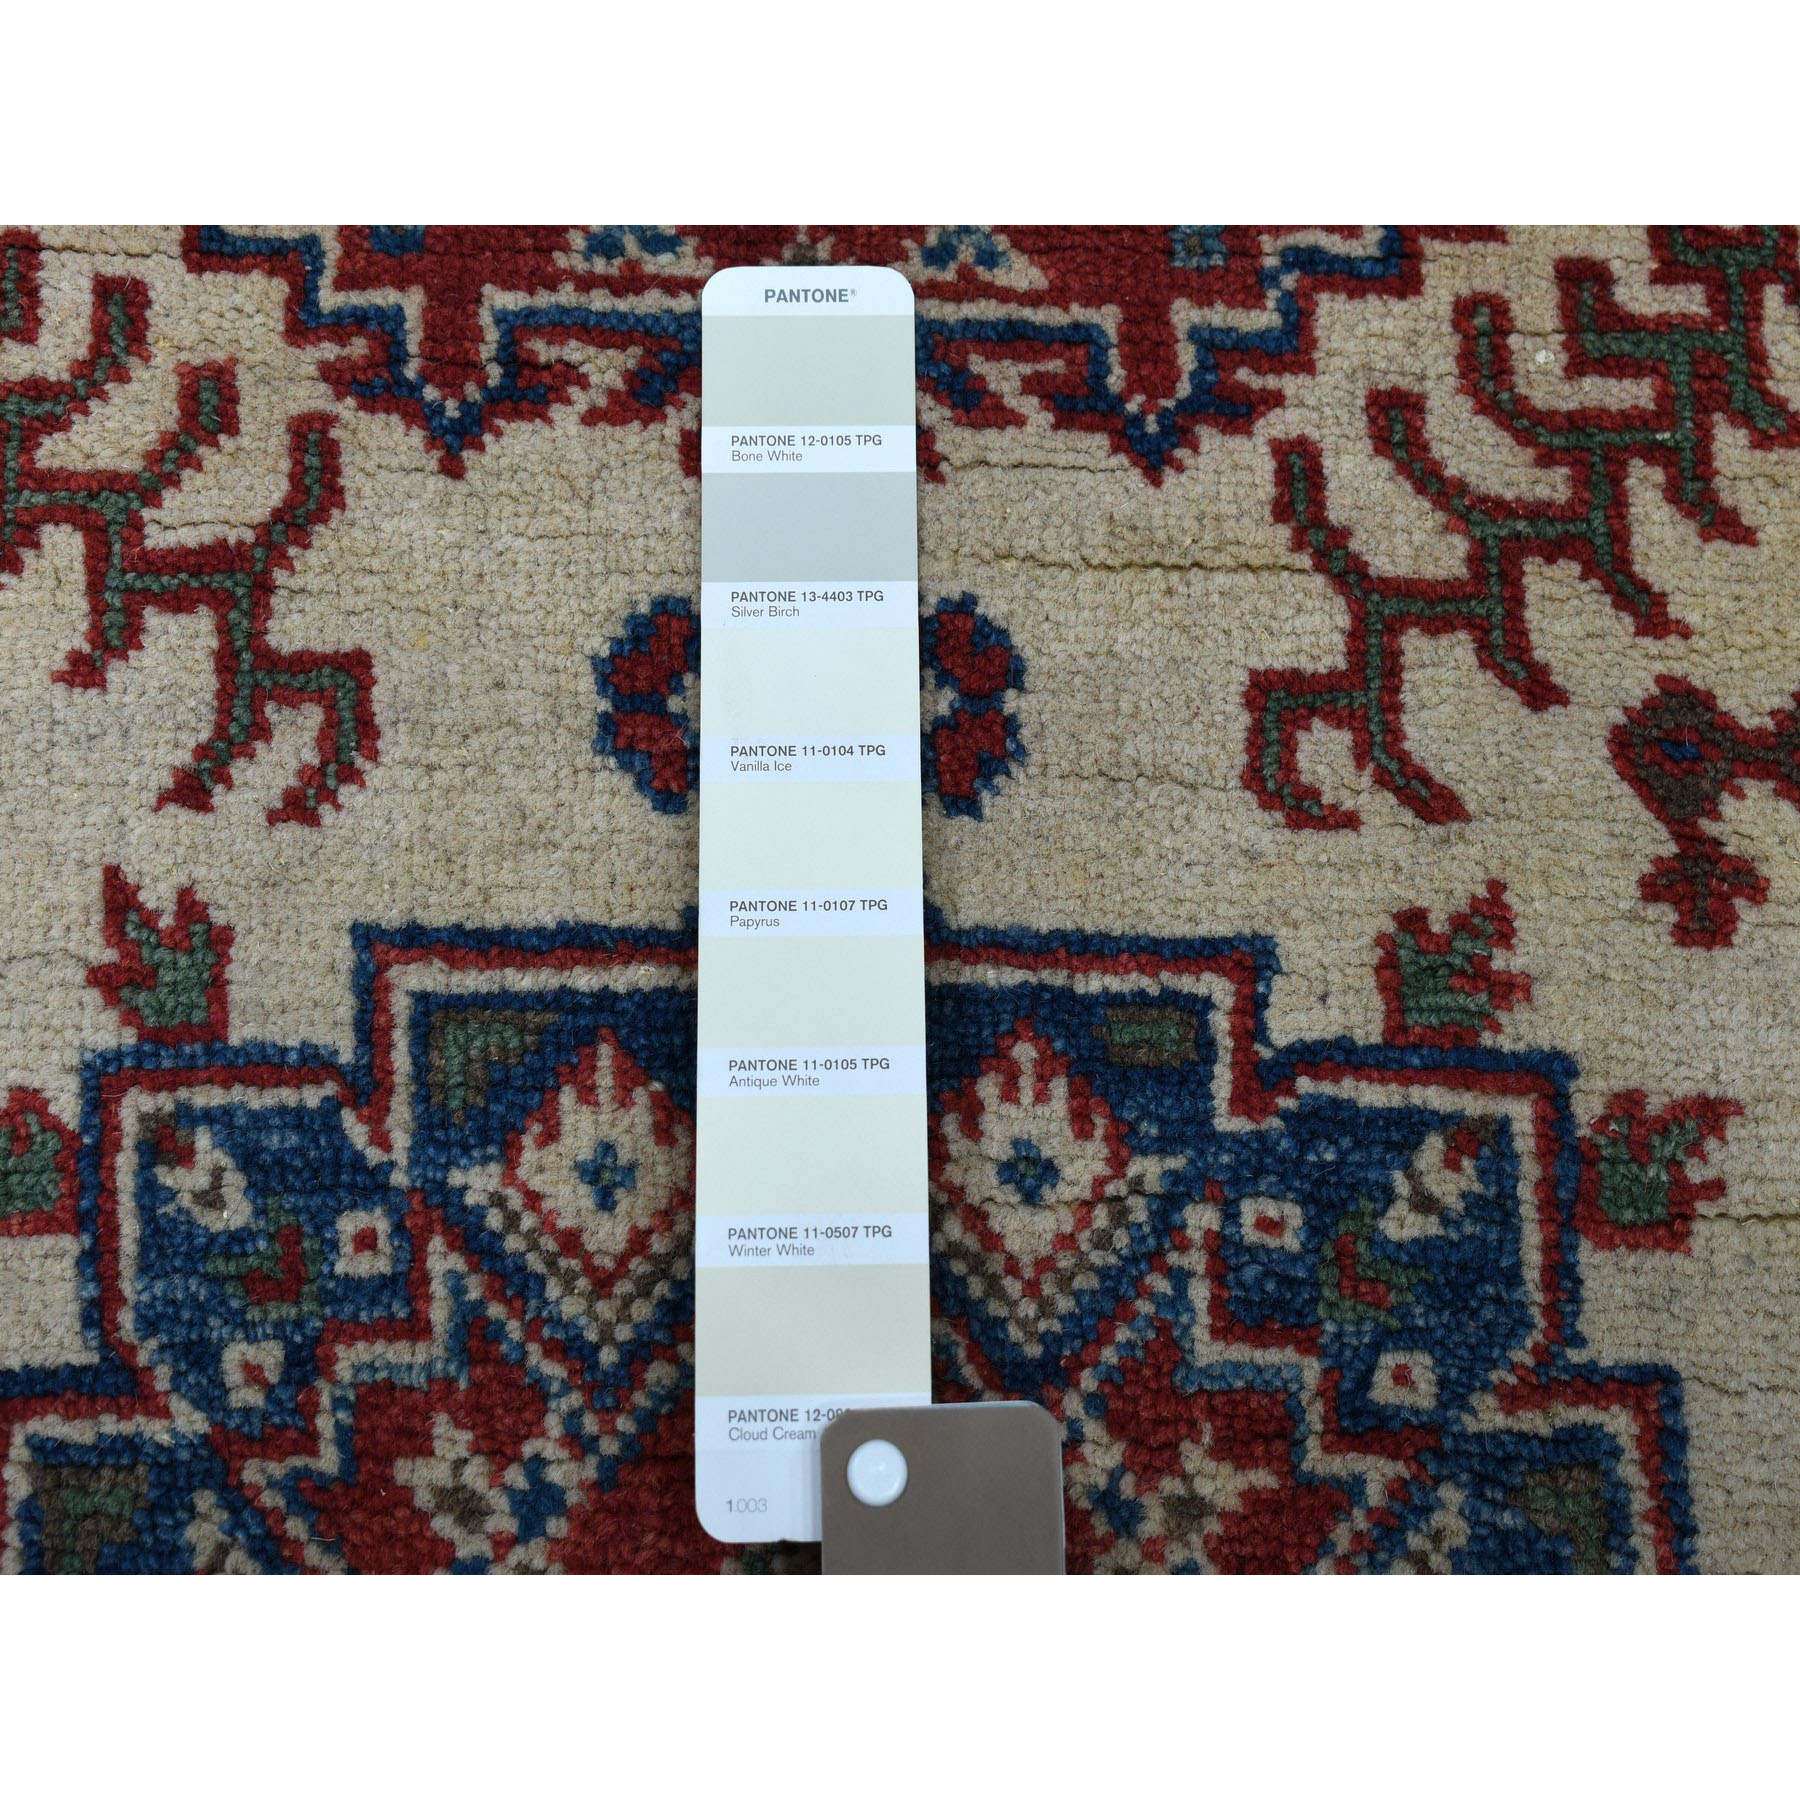 3'4"x5'6" Ivory Geometric Design Kazak Pure Wool Hand Woven Oriental Rug 